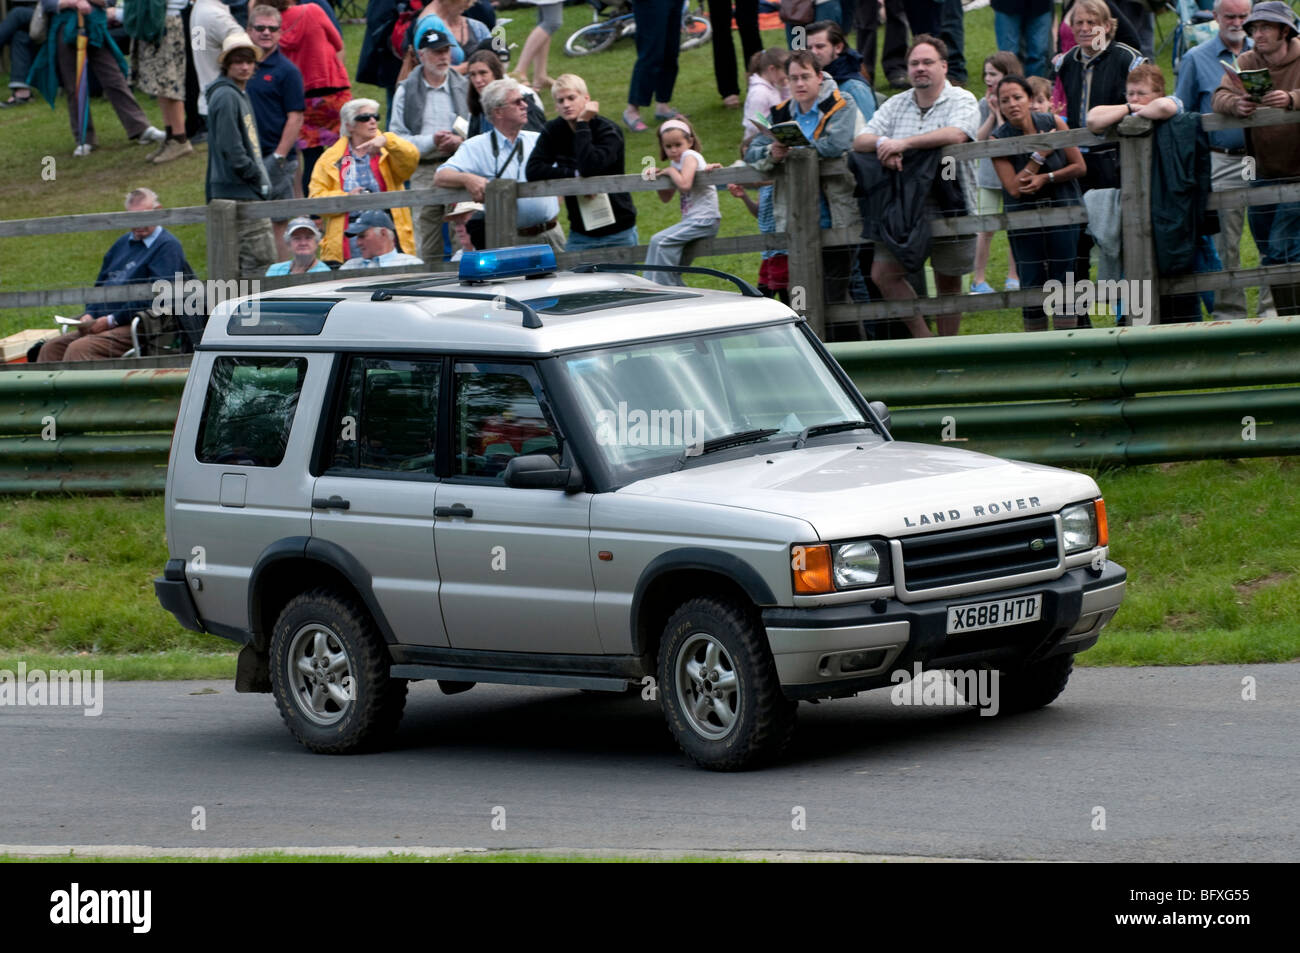 Land Rover Discovery Course car Stock Photo